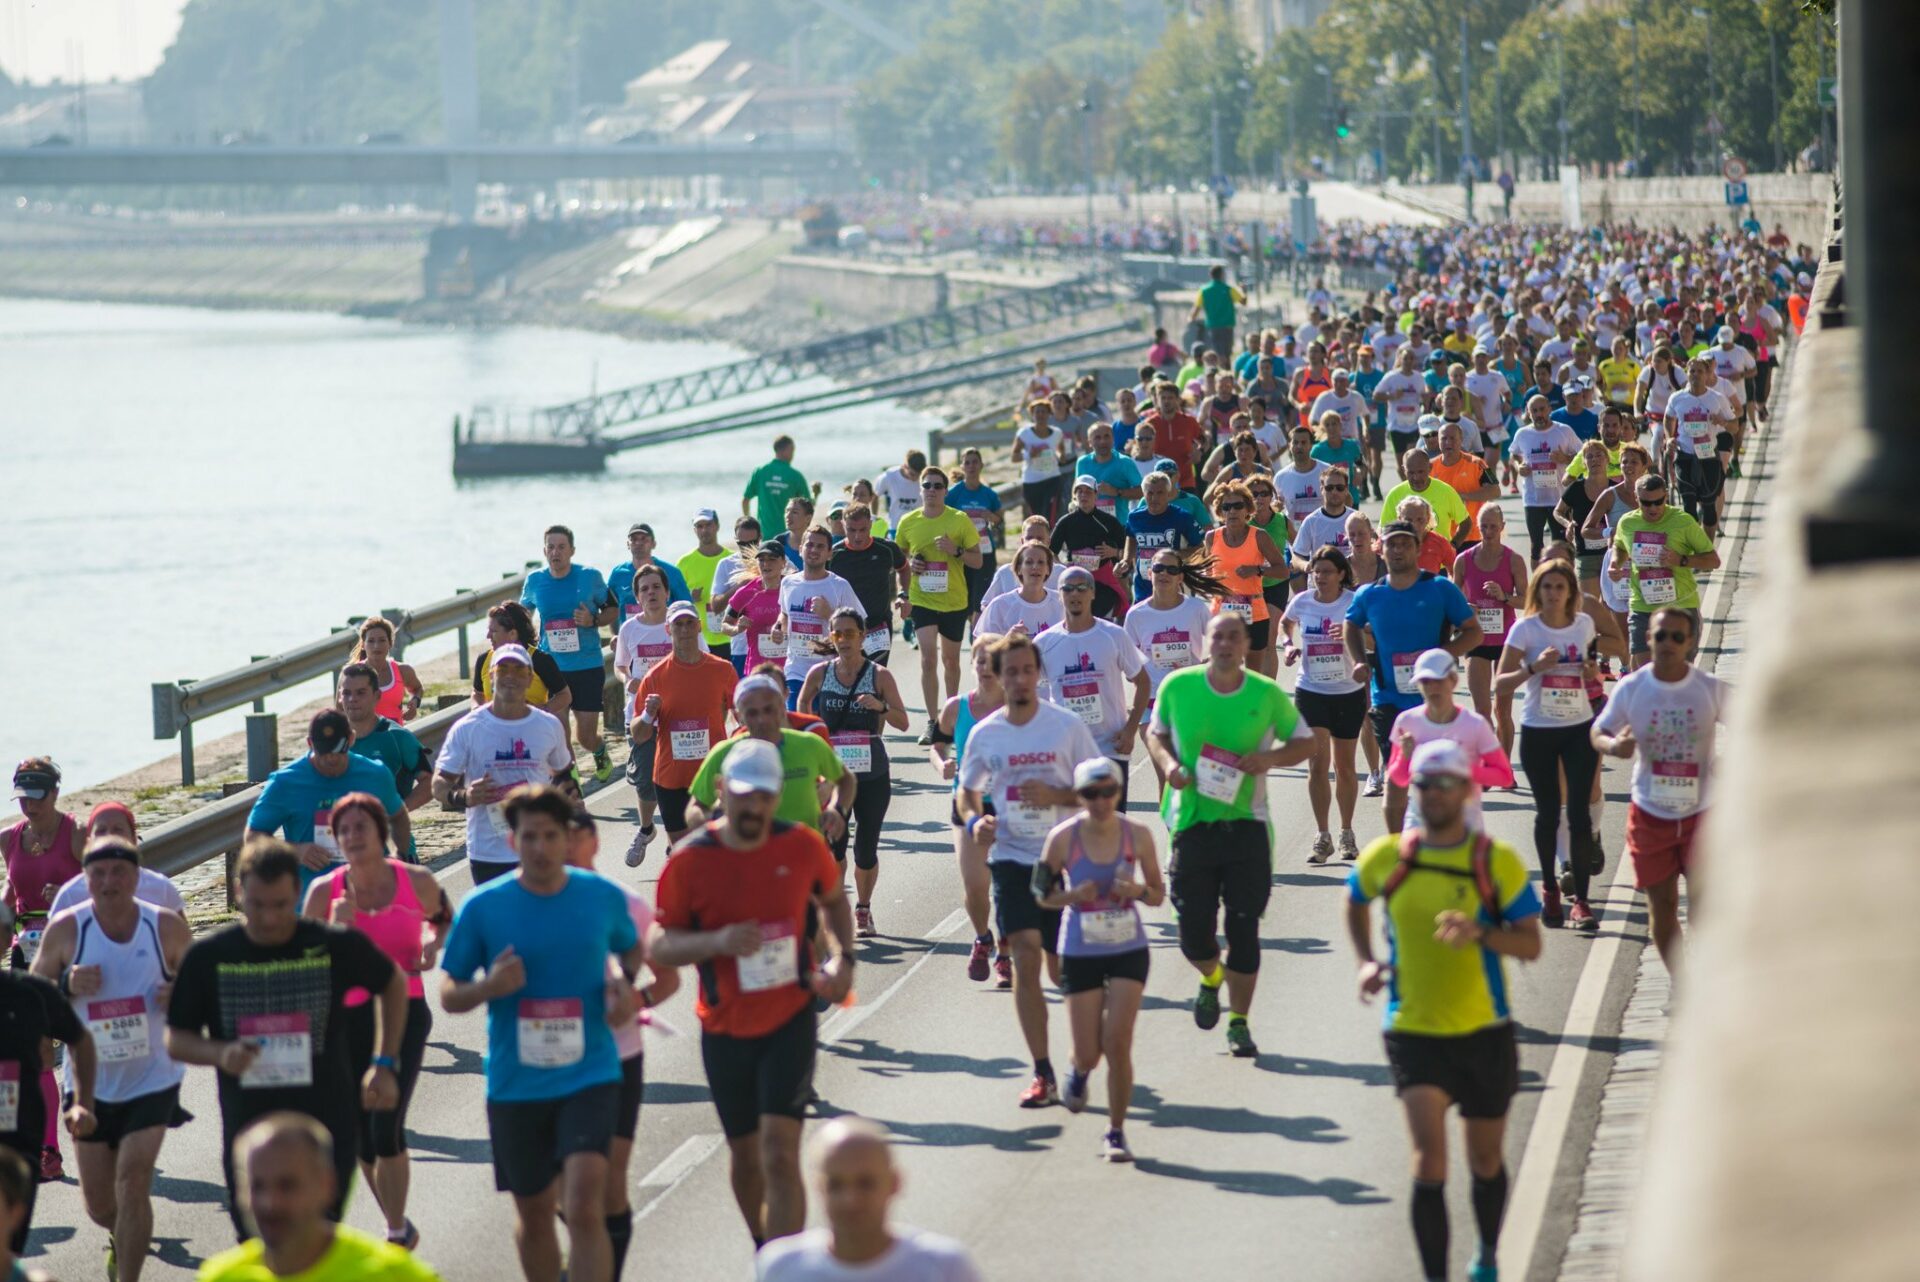 The inhabitants running the Vivicittá marathon in Budapest - sport opportunities